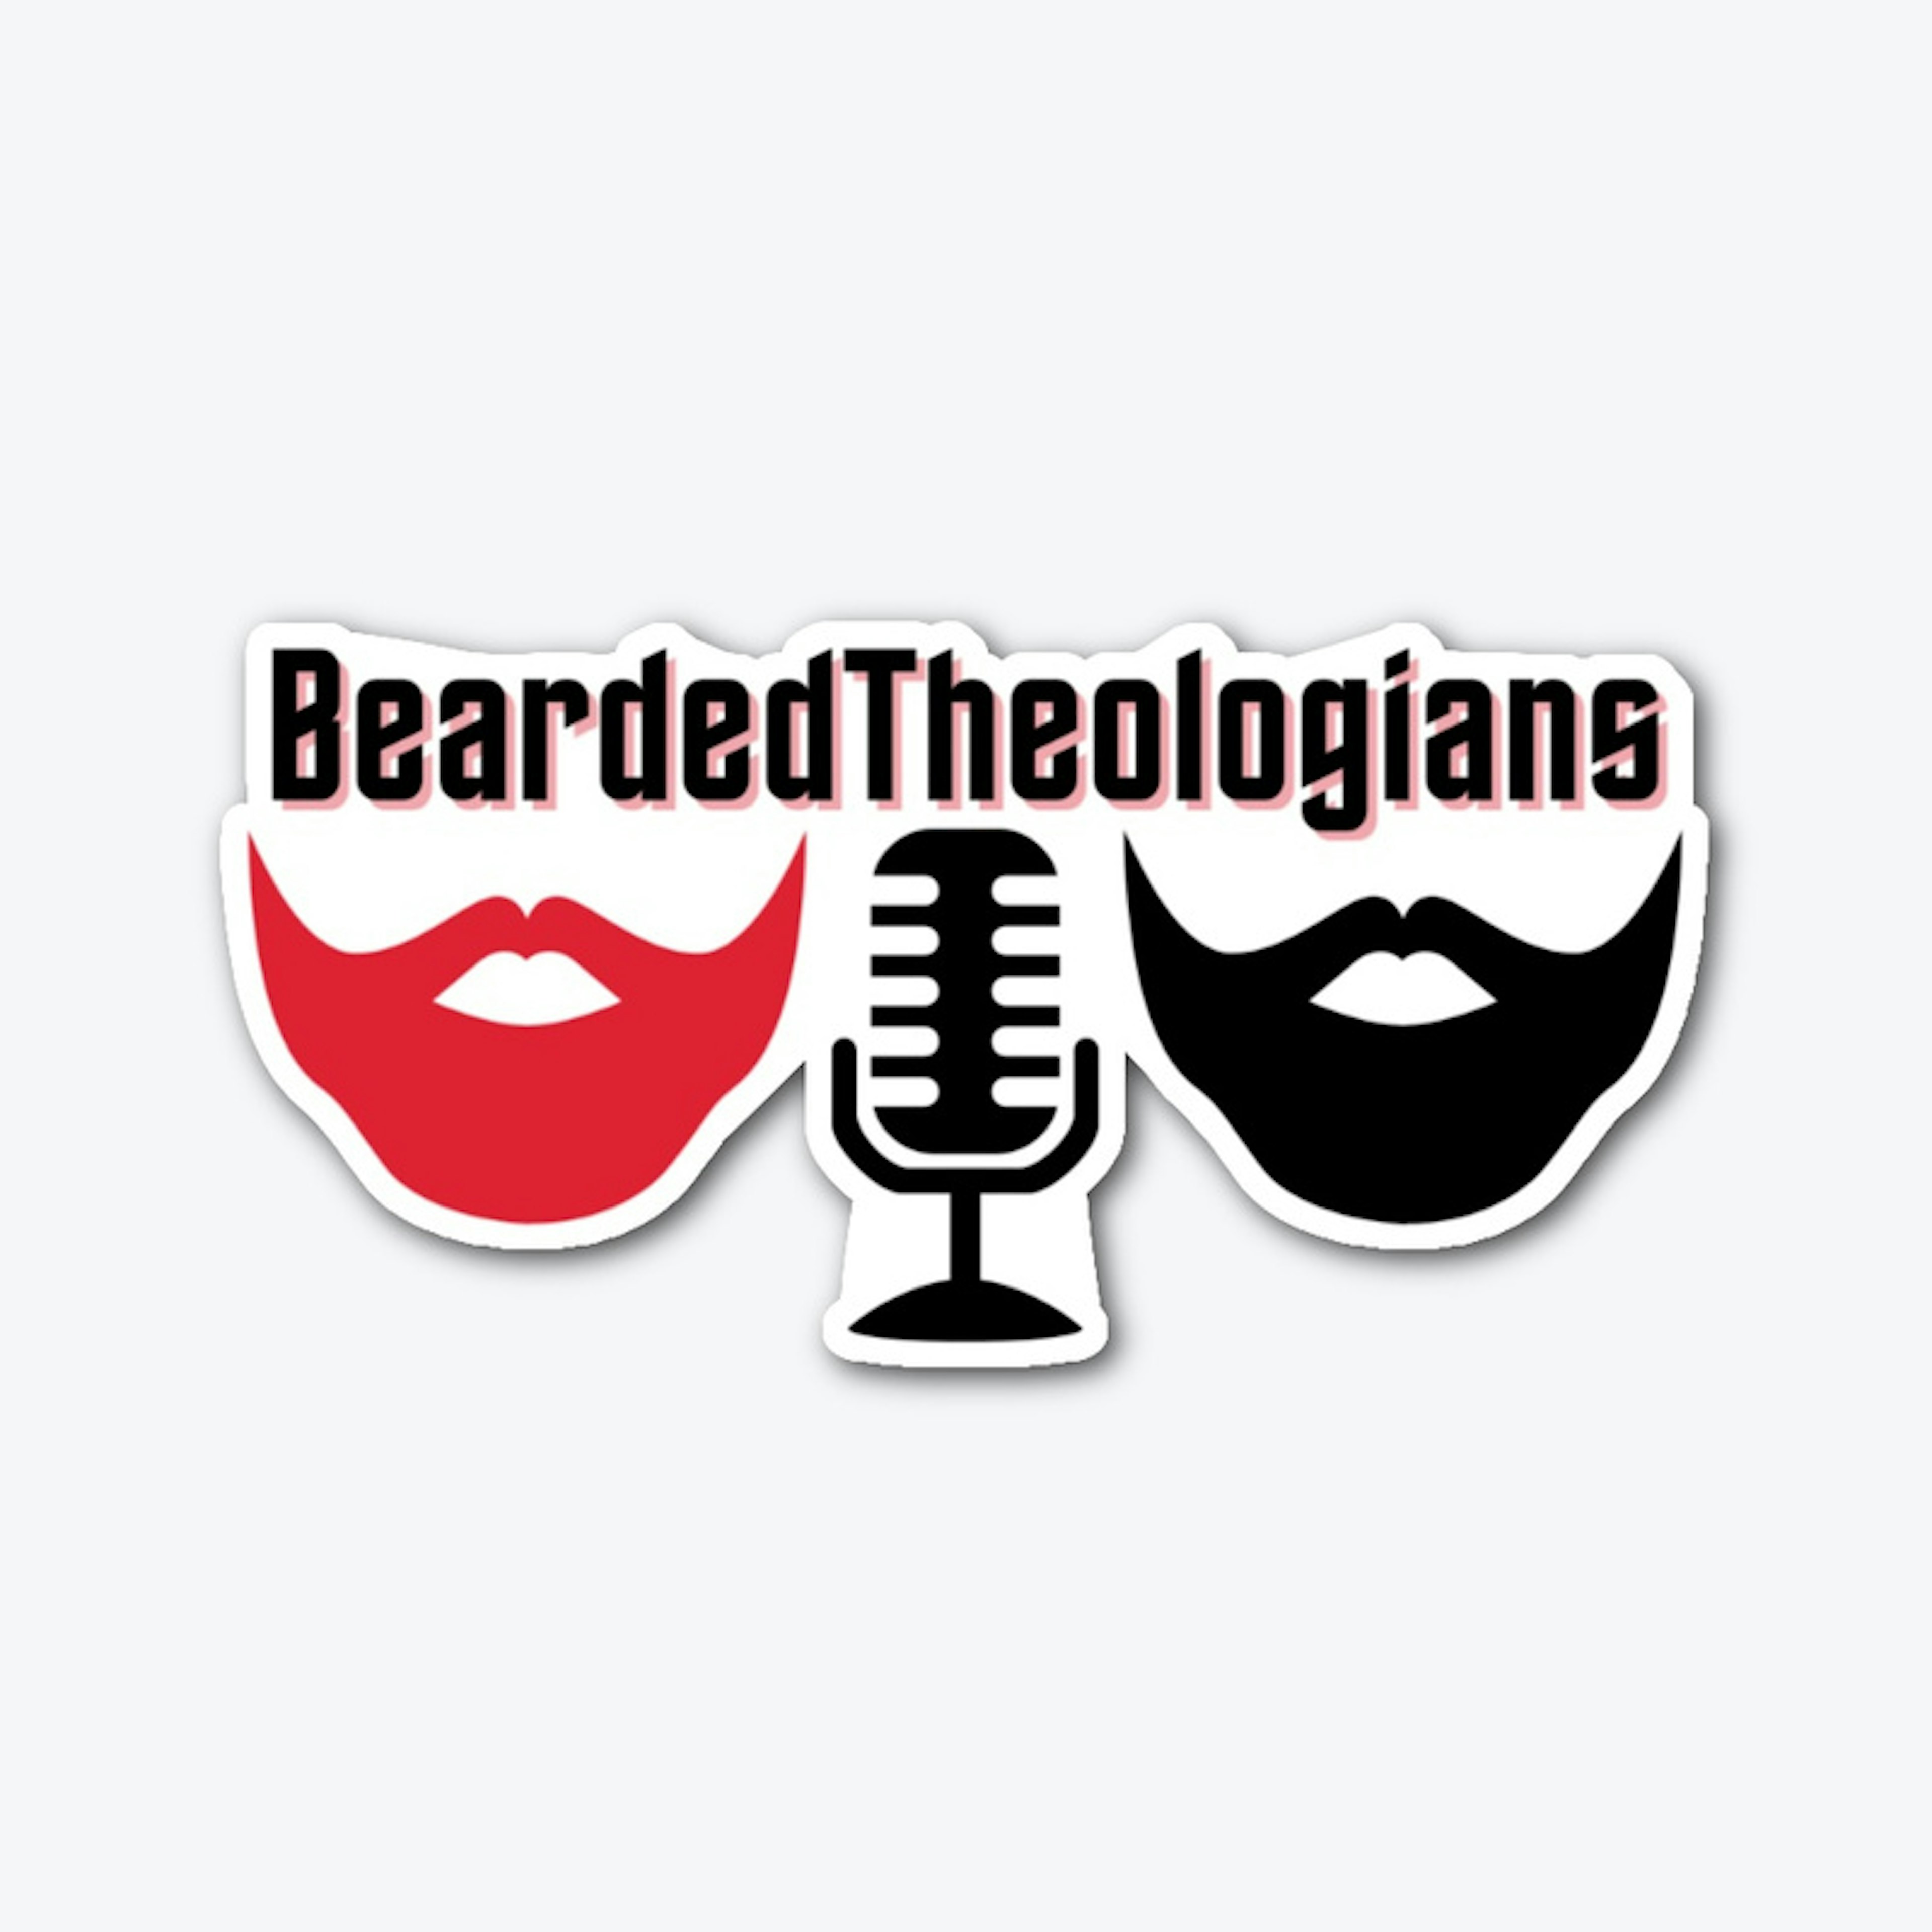 New Bearded Theologians Logo 2022